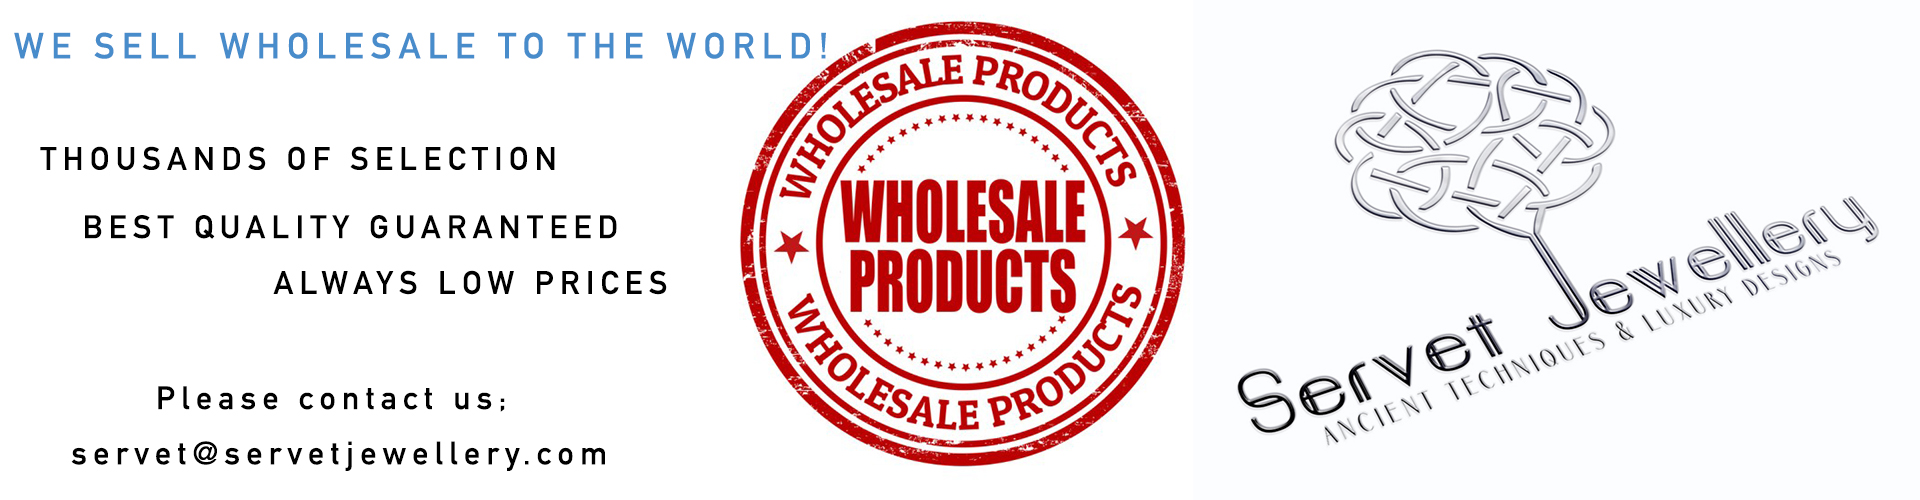 wholesale-banner